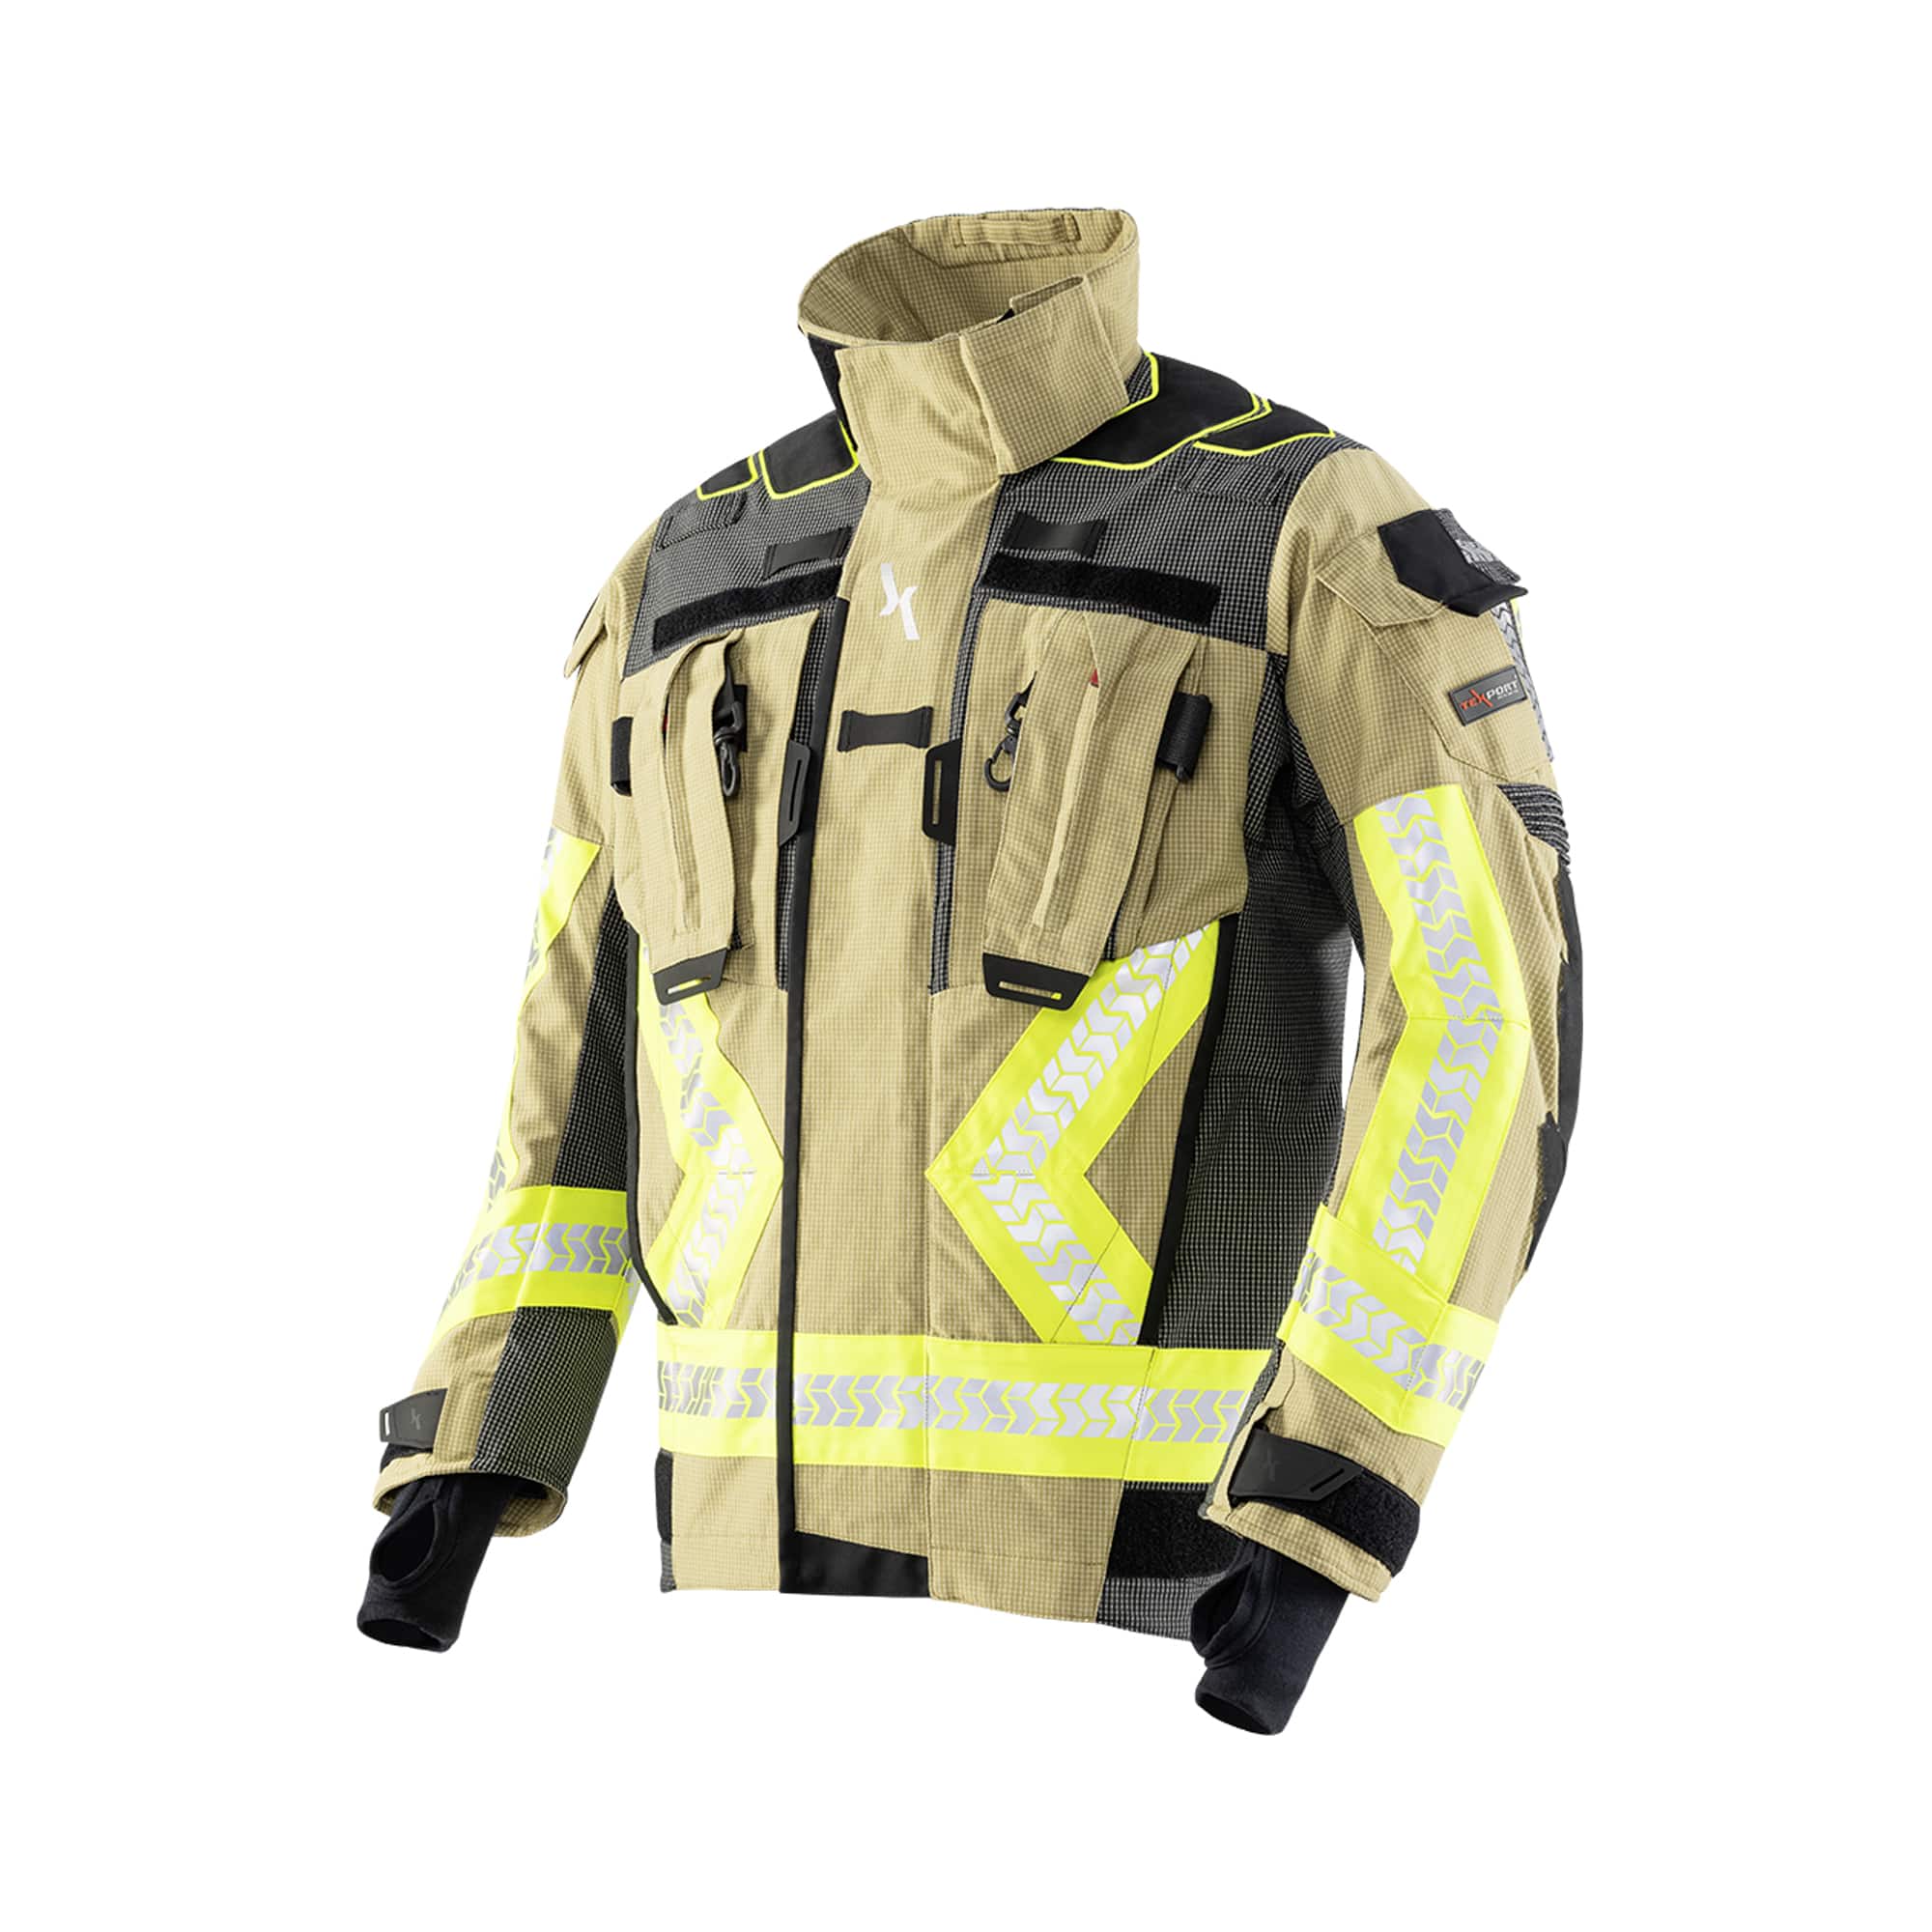 Firefighter suit Texport Fire X-Flash